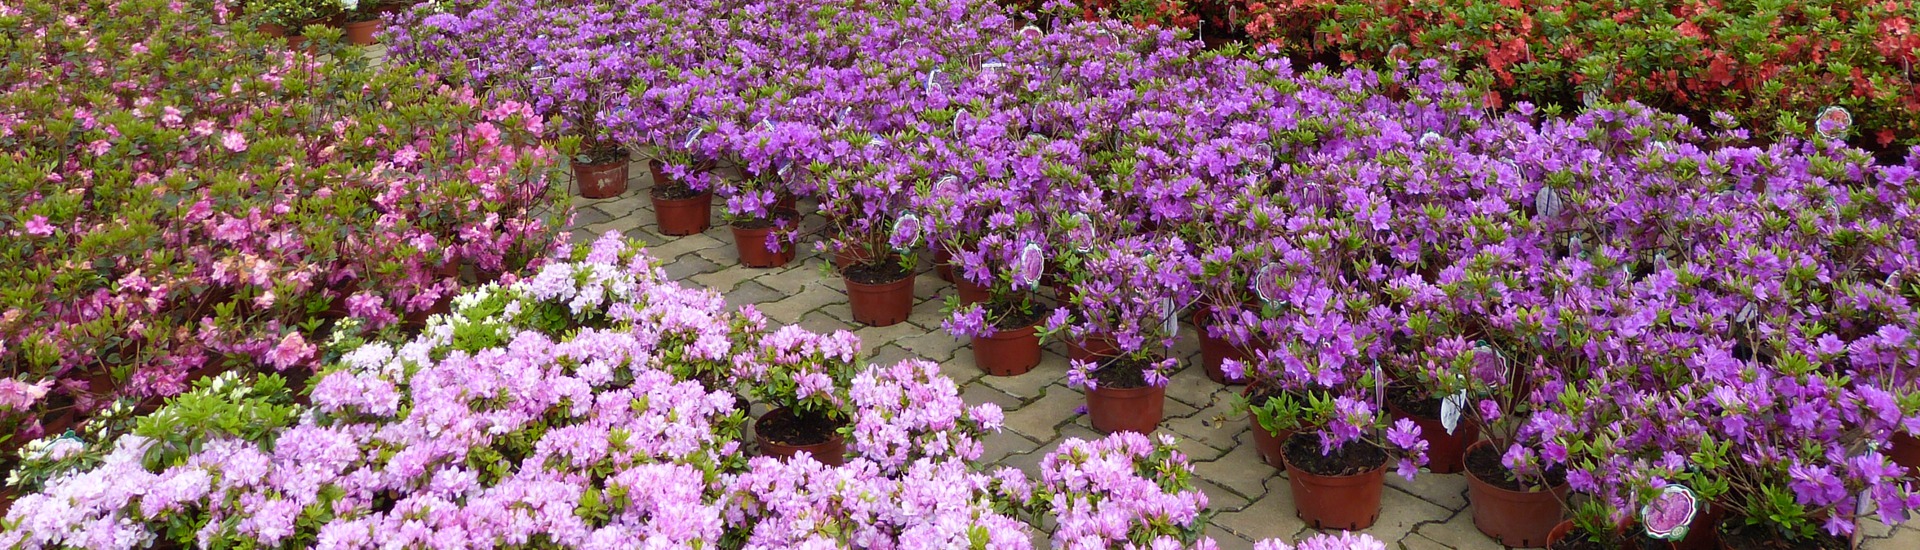 Nursery of heather plants, producer of seedlings of heather plants and Japanese azaleas - Poland